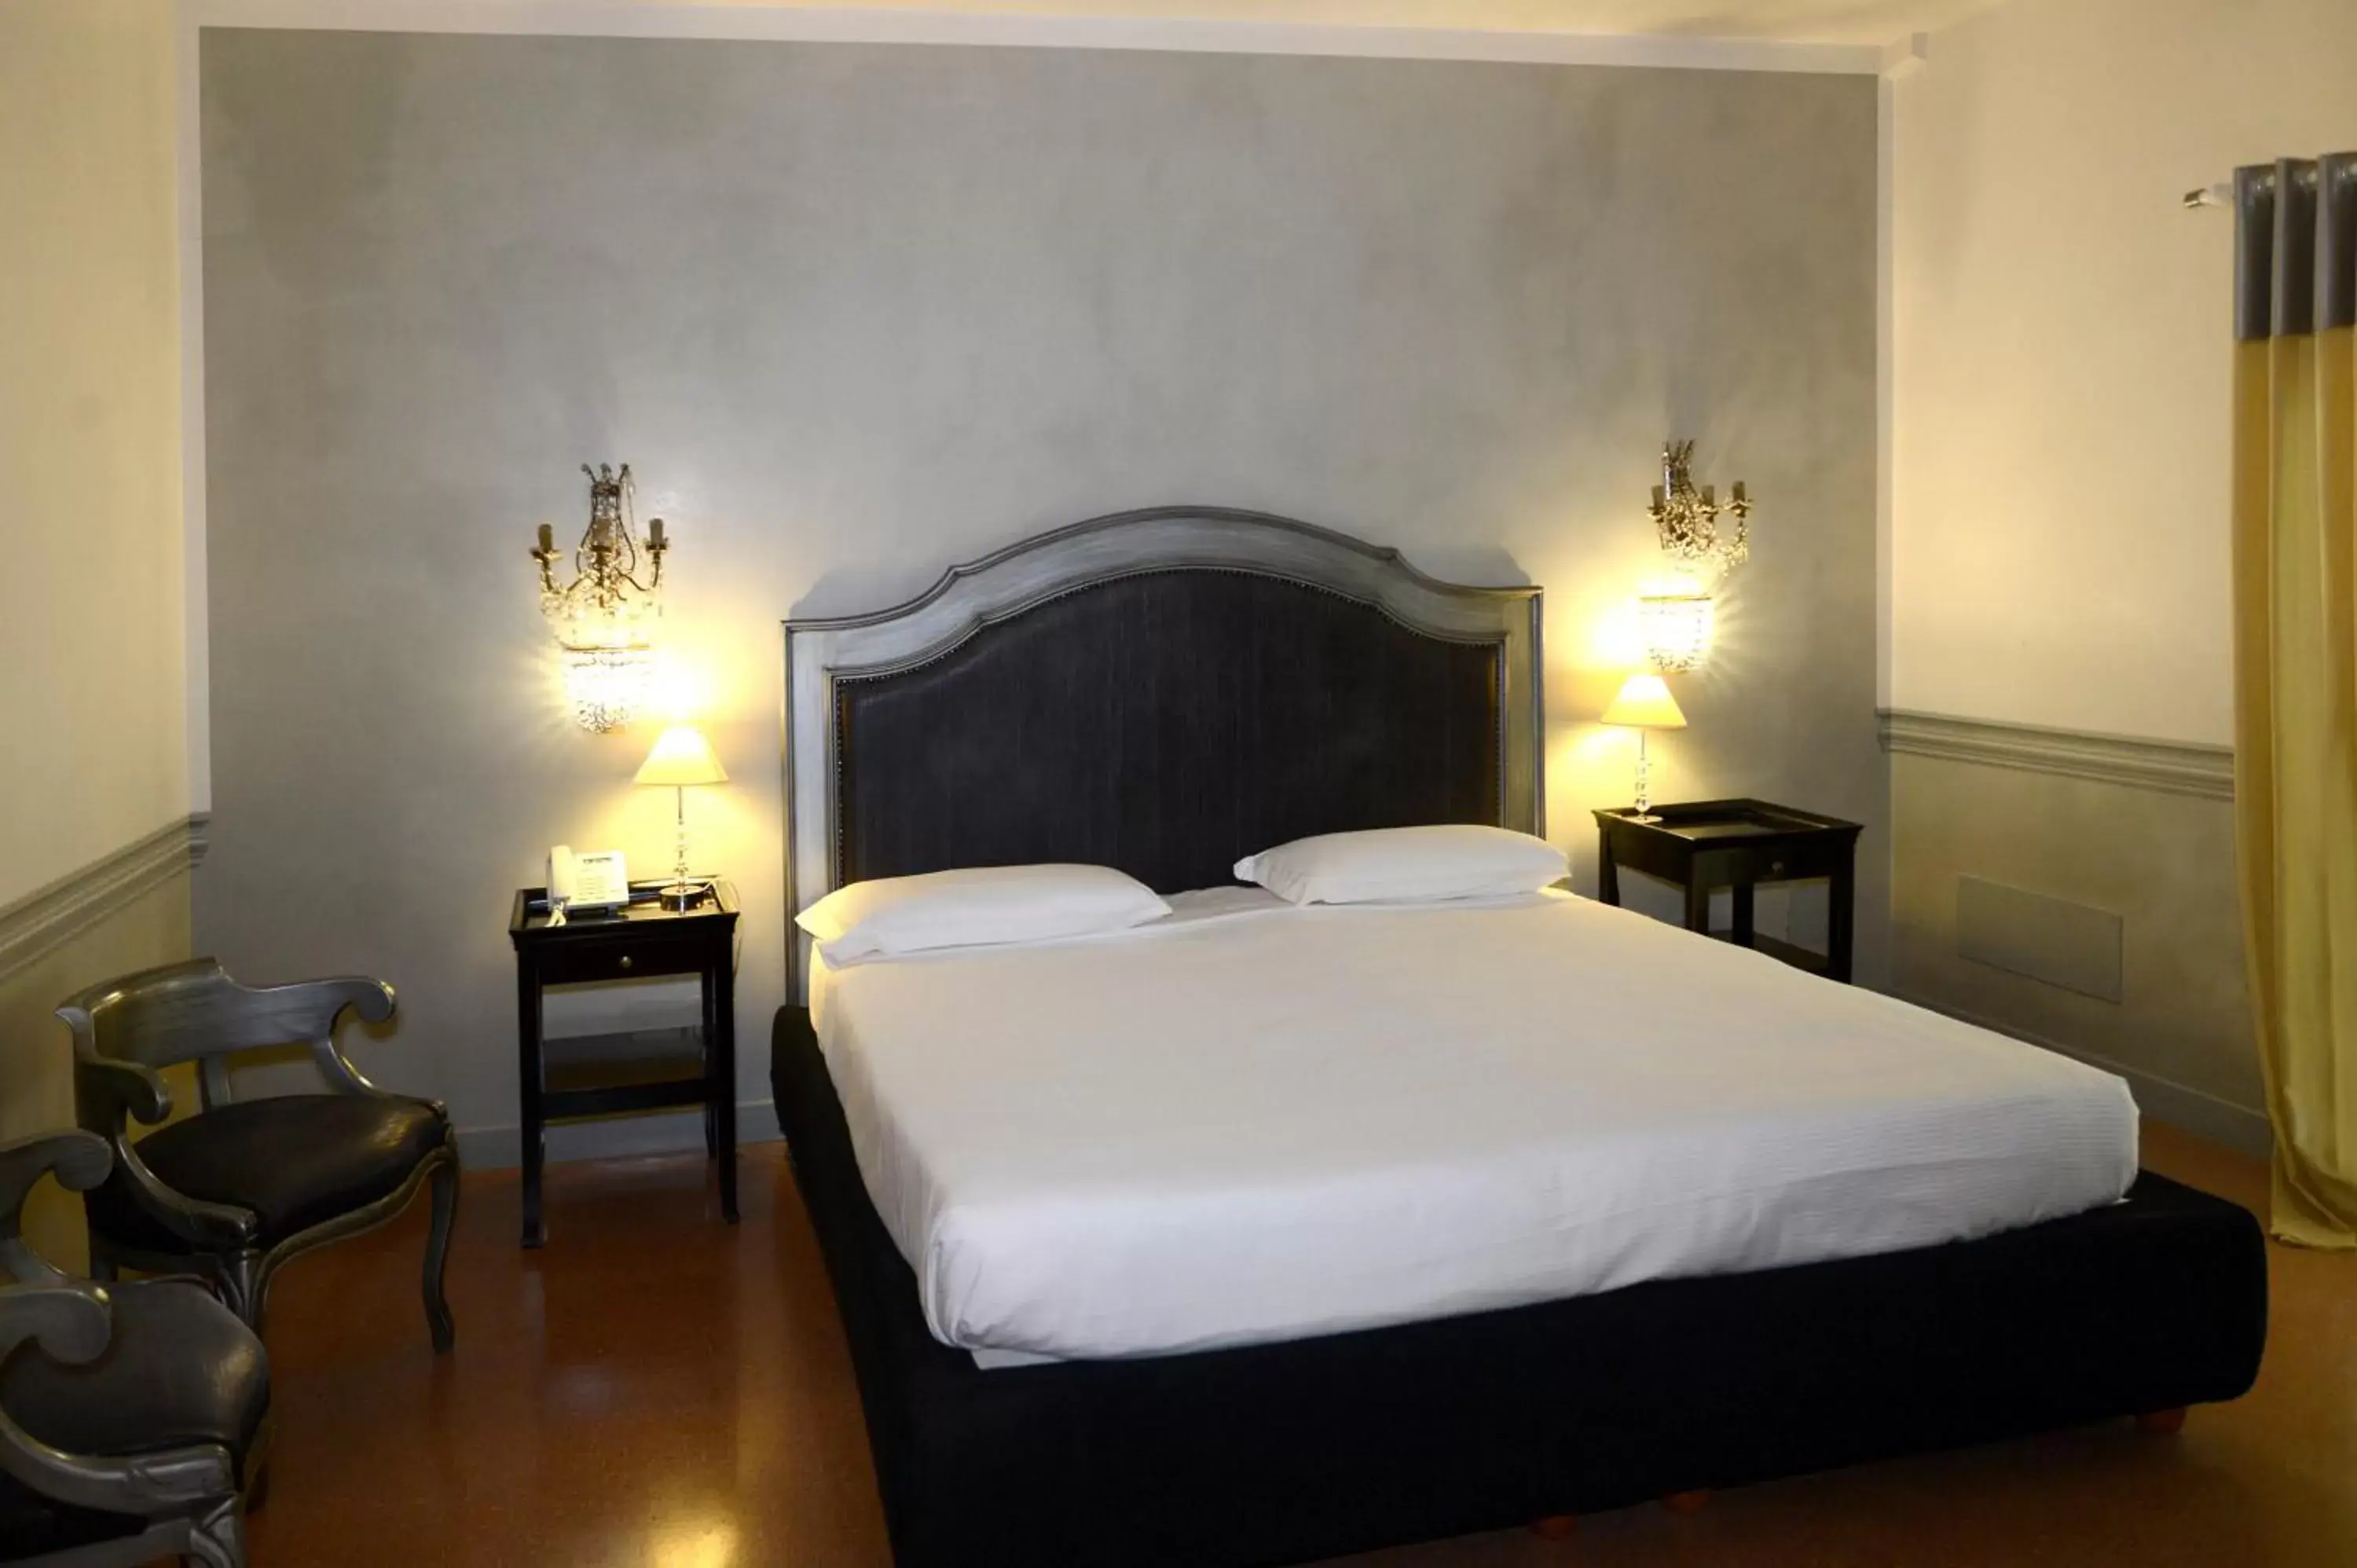 Bedroom, Room Photo in Villa Foscarini Cornaro